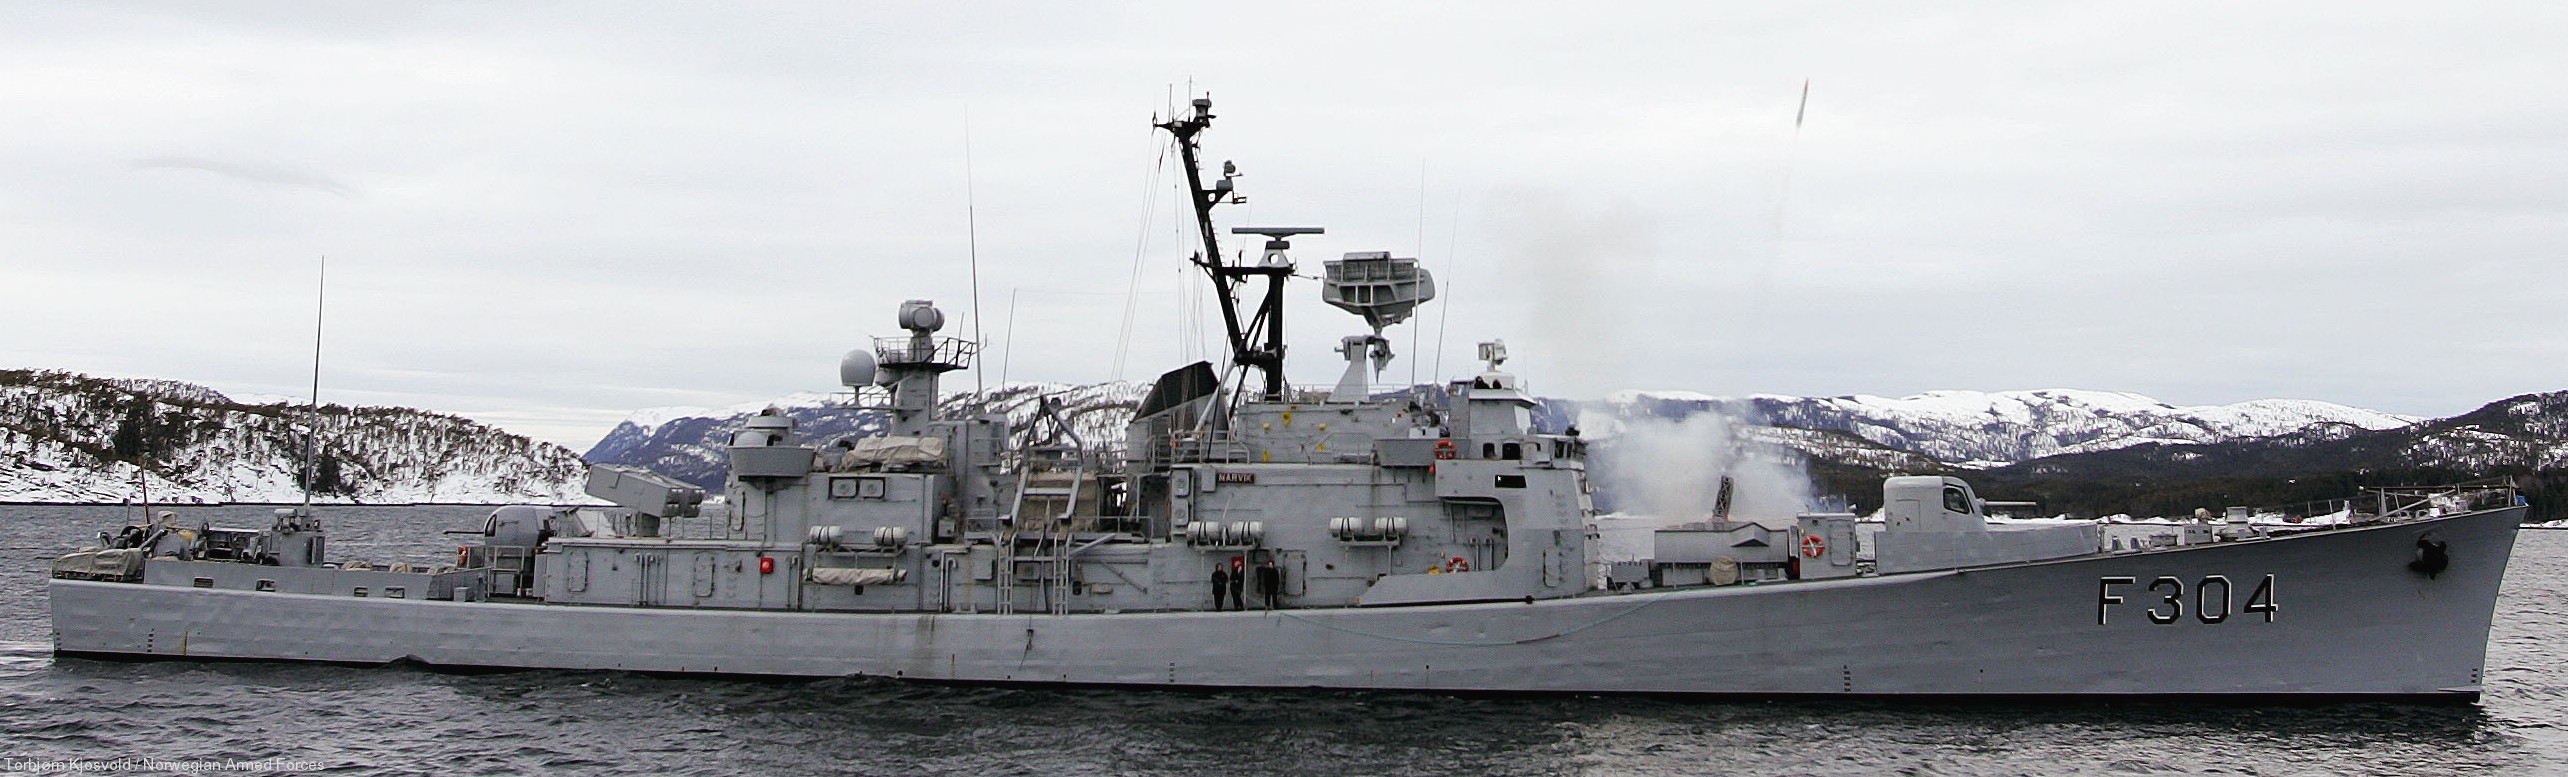 f-304 hnoms narvik knm oslo class frigate royal norwegian navy sjoforsvaret 12